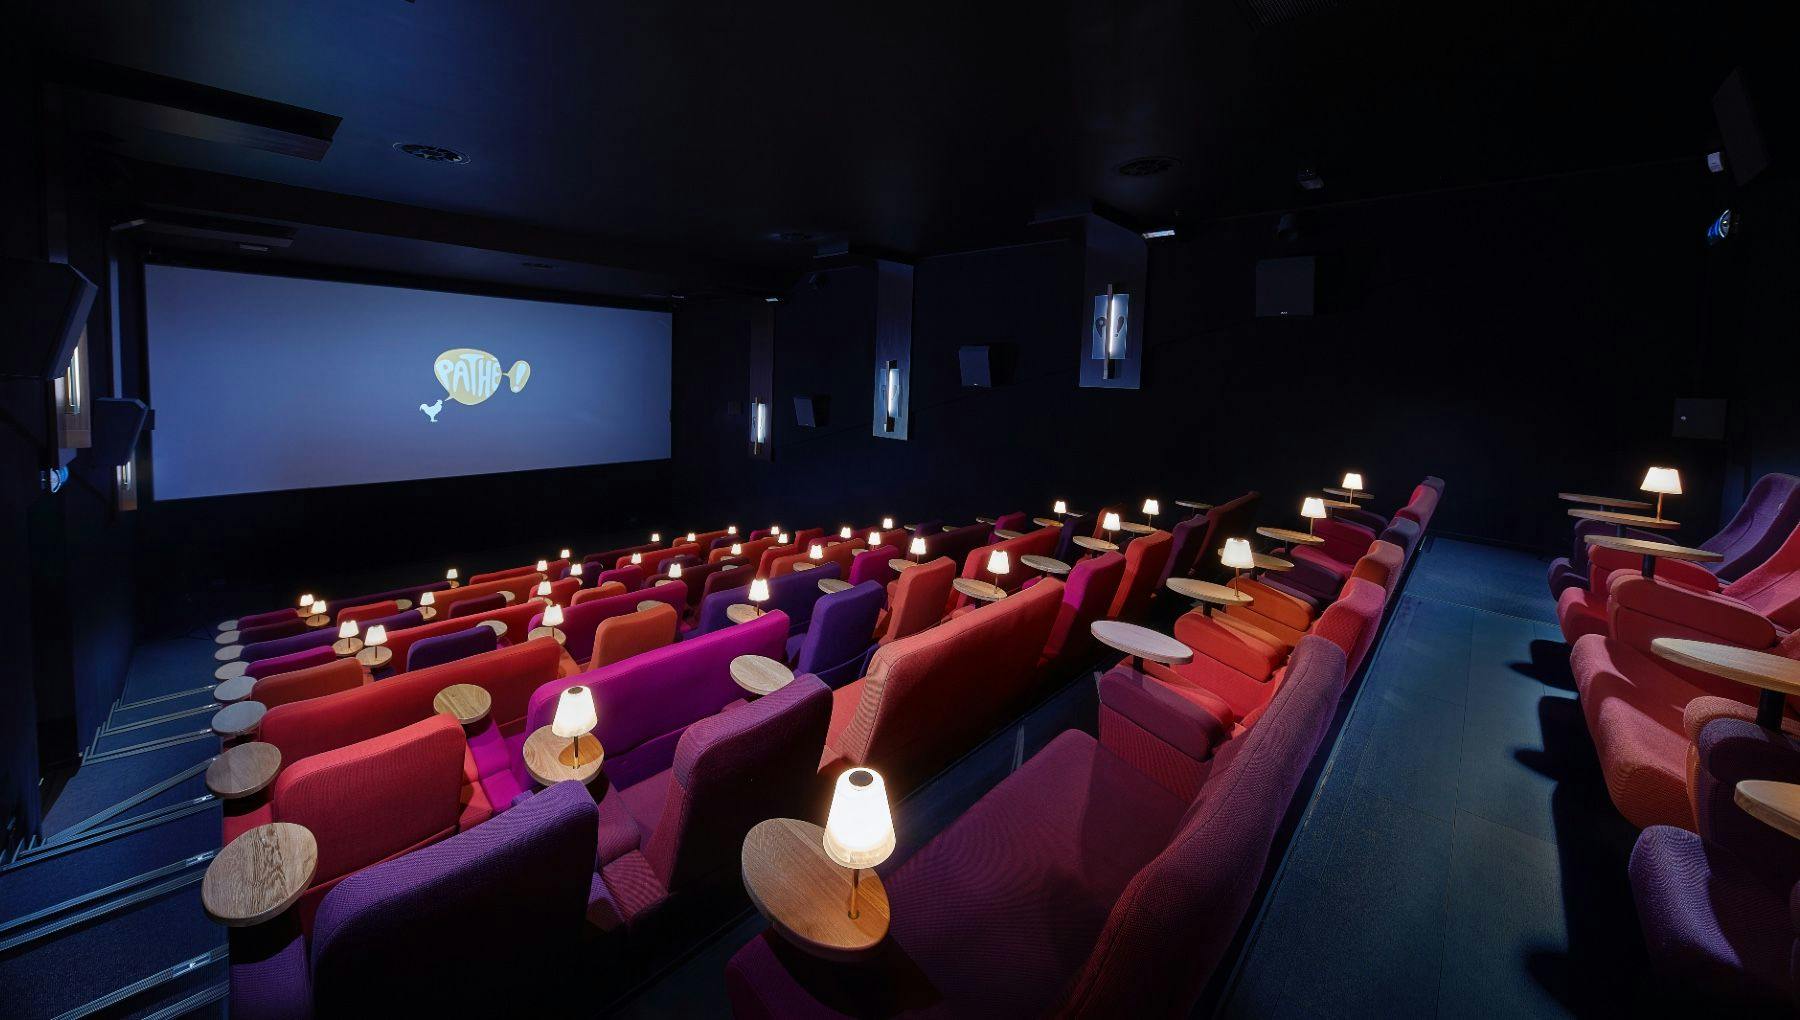 Pathé City cinema interior